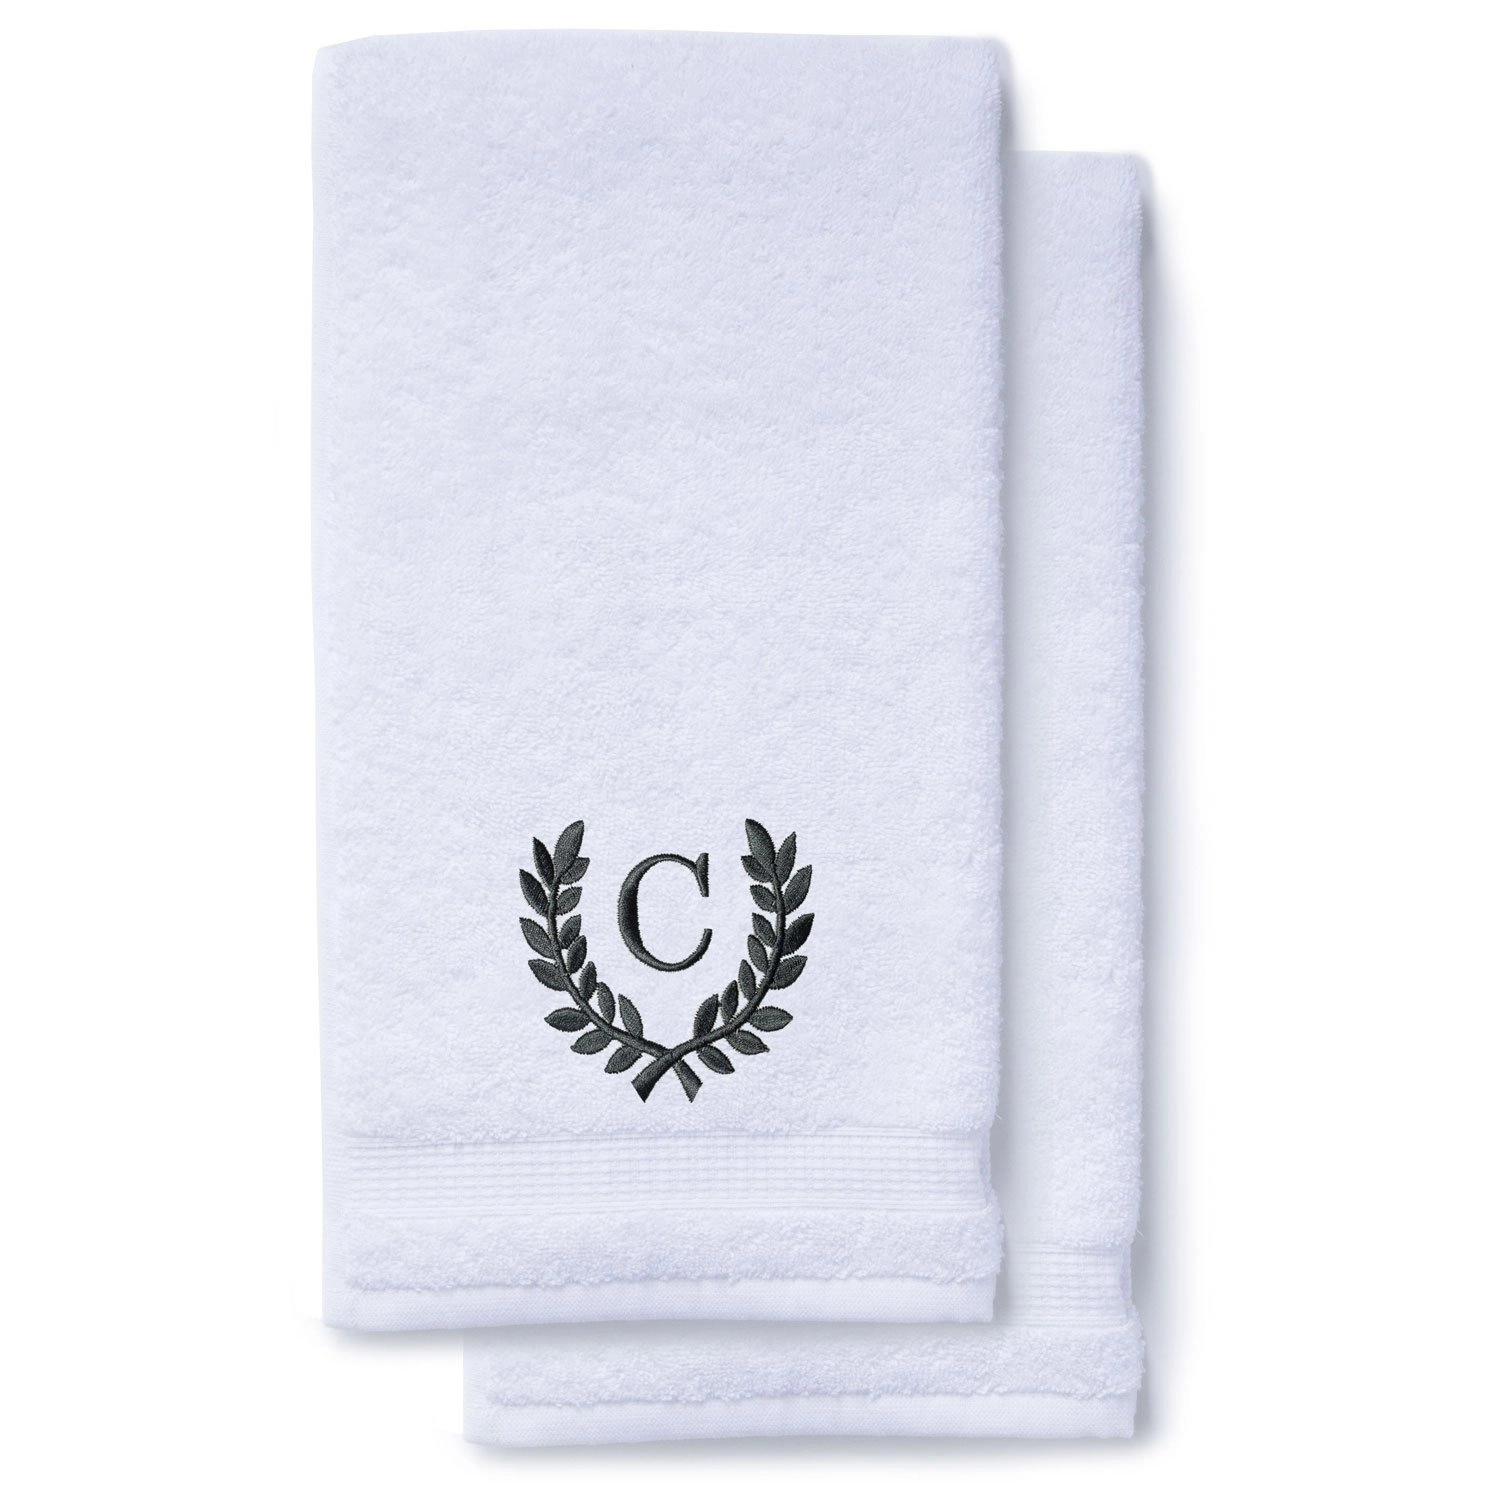 https://robemart.com/images/thumbnails/detailed/7/C-Ant-stacked-Monogrammed-Hand-Towels.webp